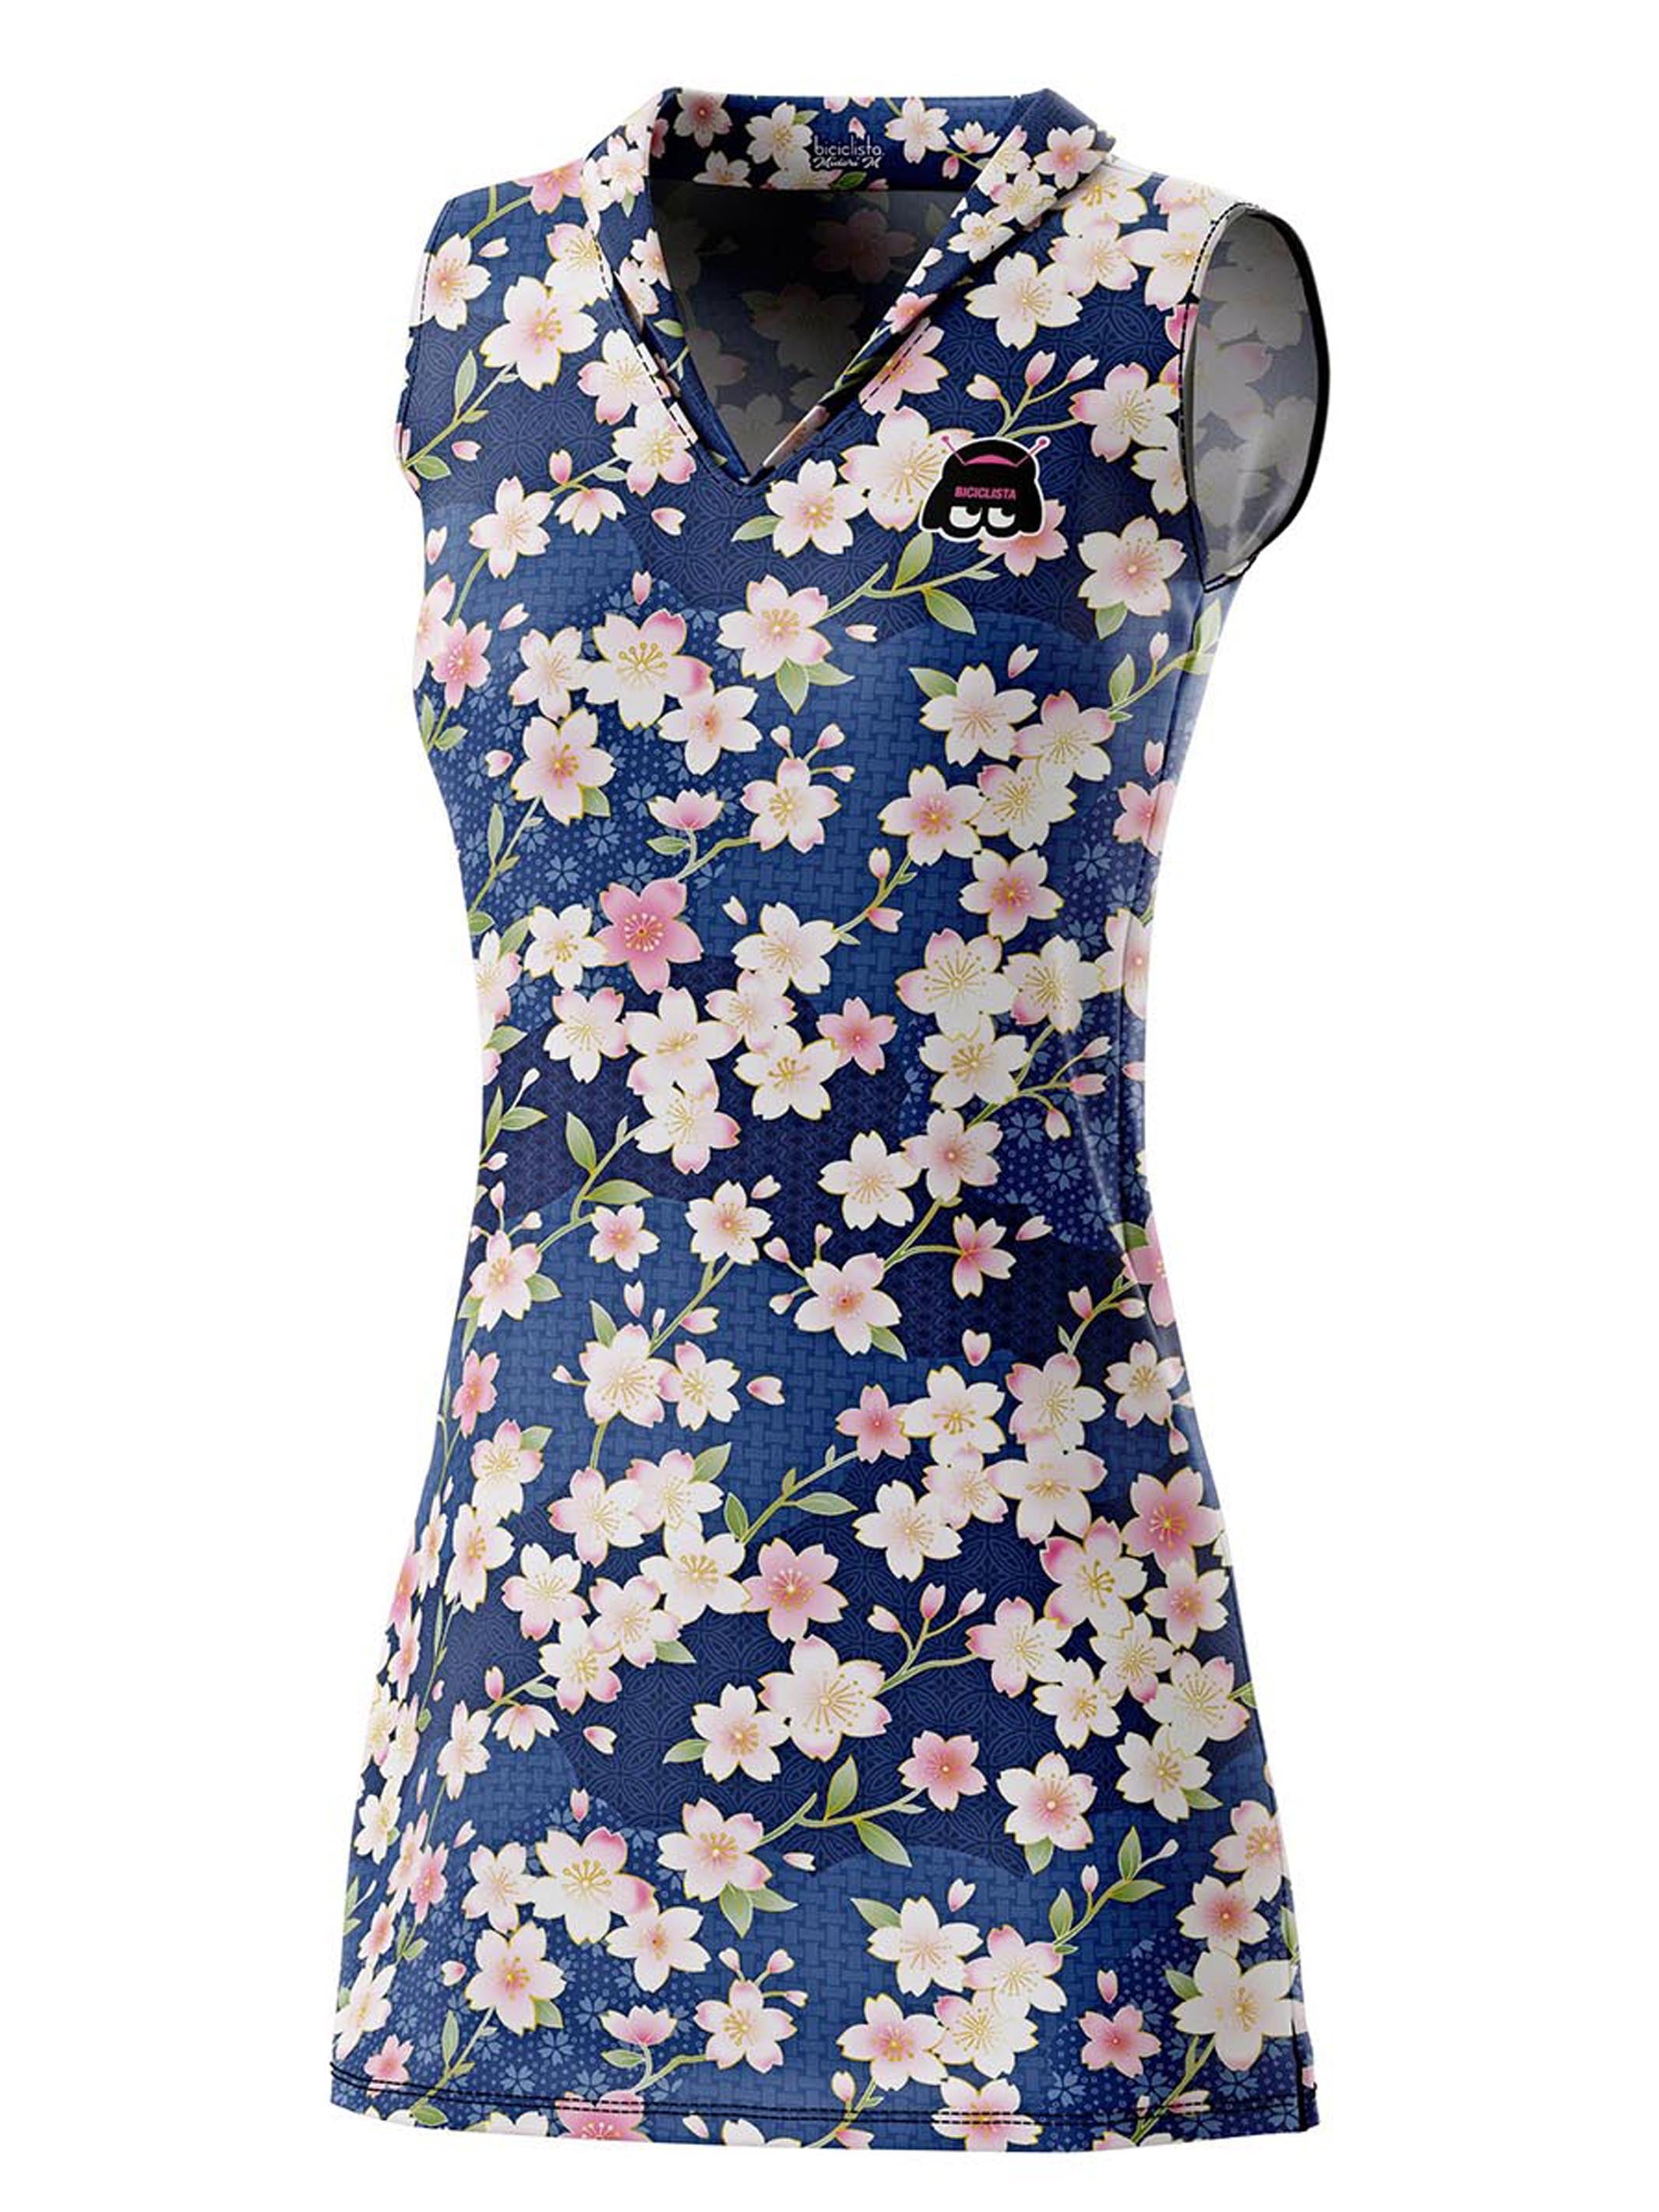 MIDORI - Sleeveless Sport Dress